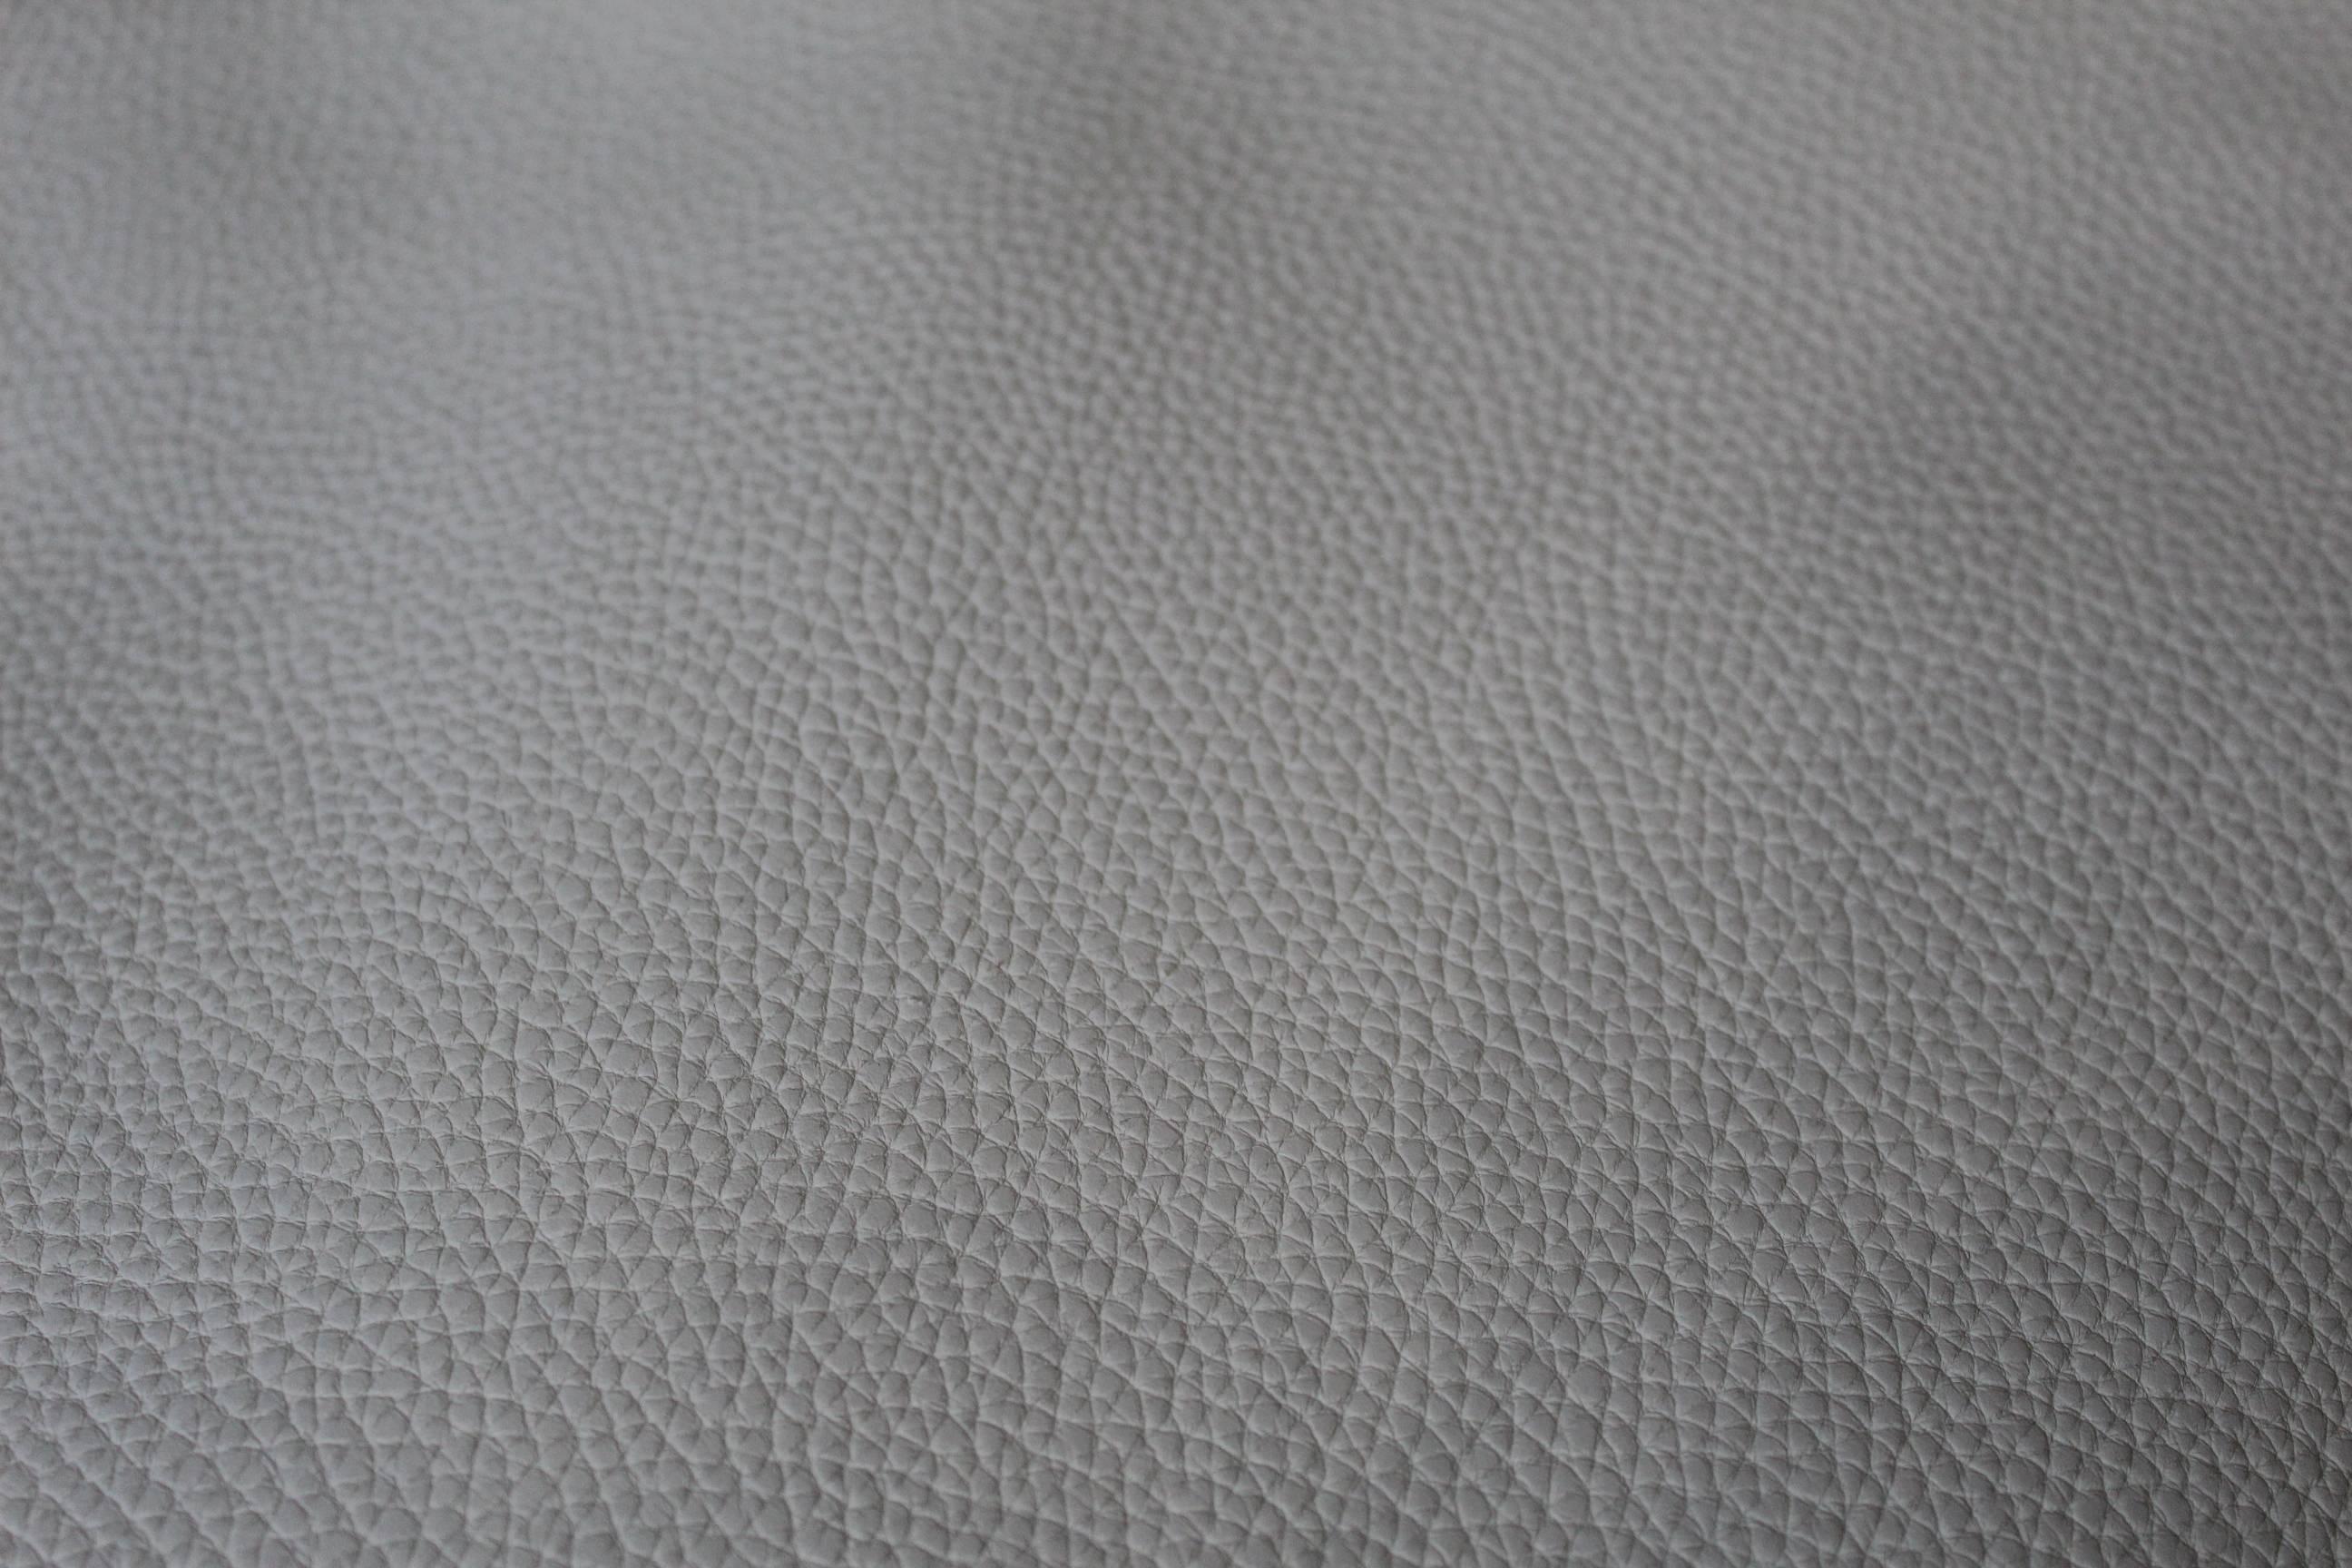 Hermes 2006 White Clemence Taurillon Leather Massai bag 3